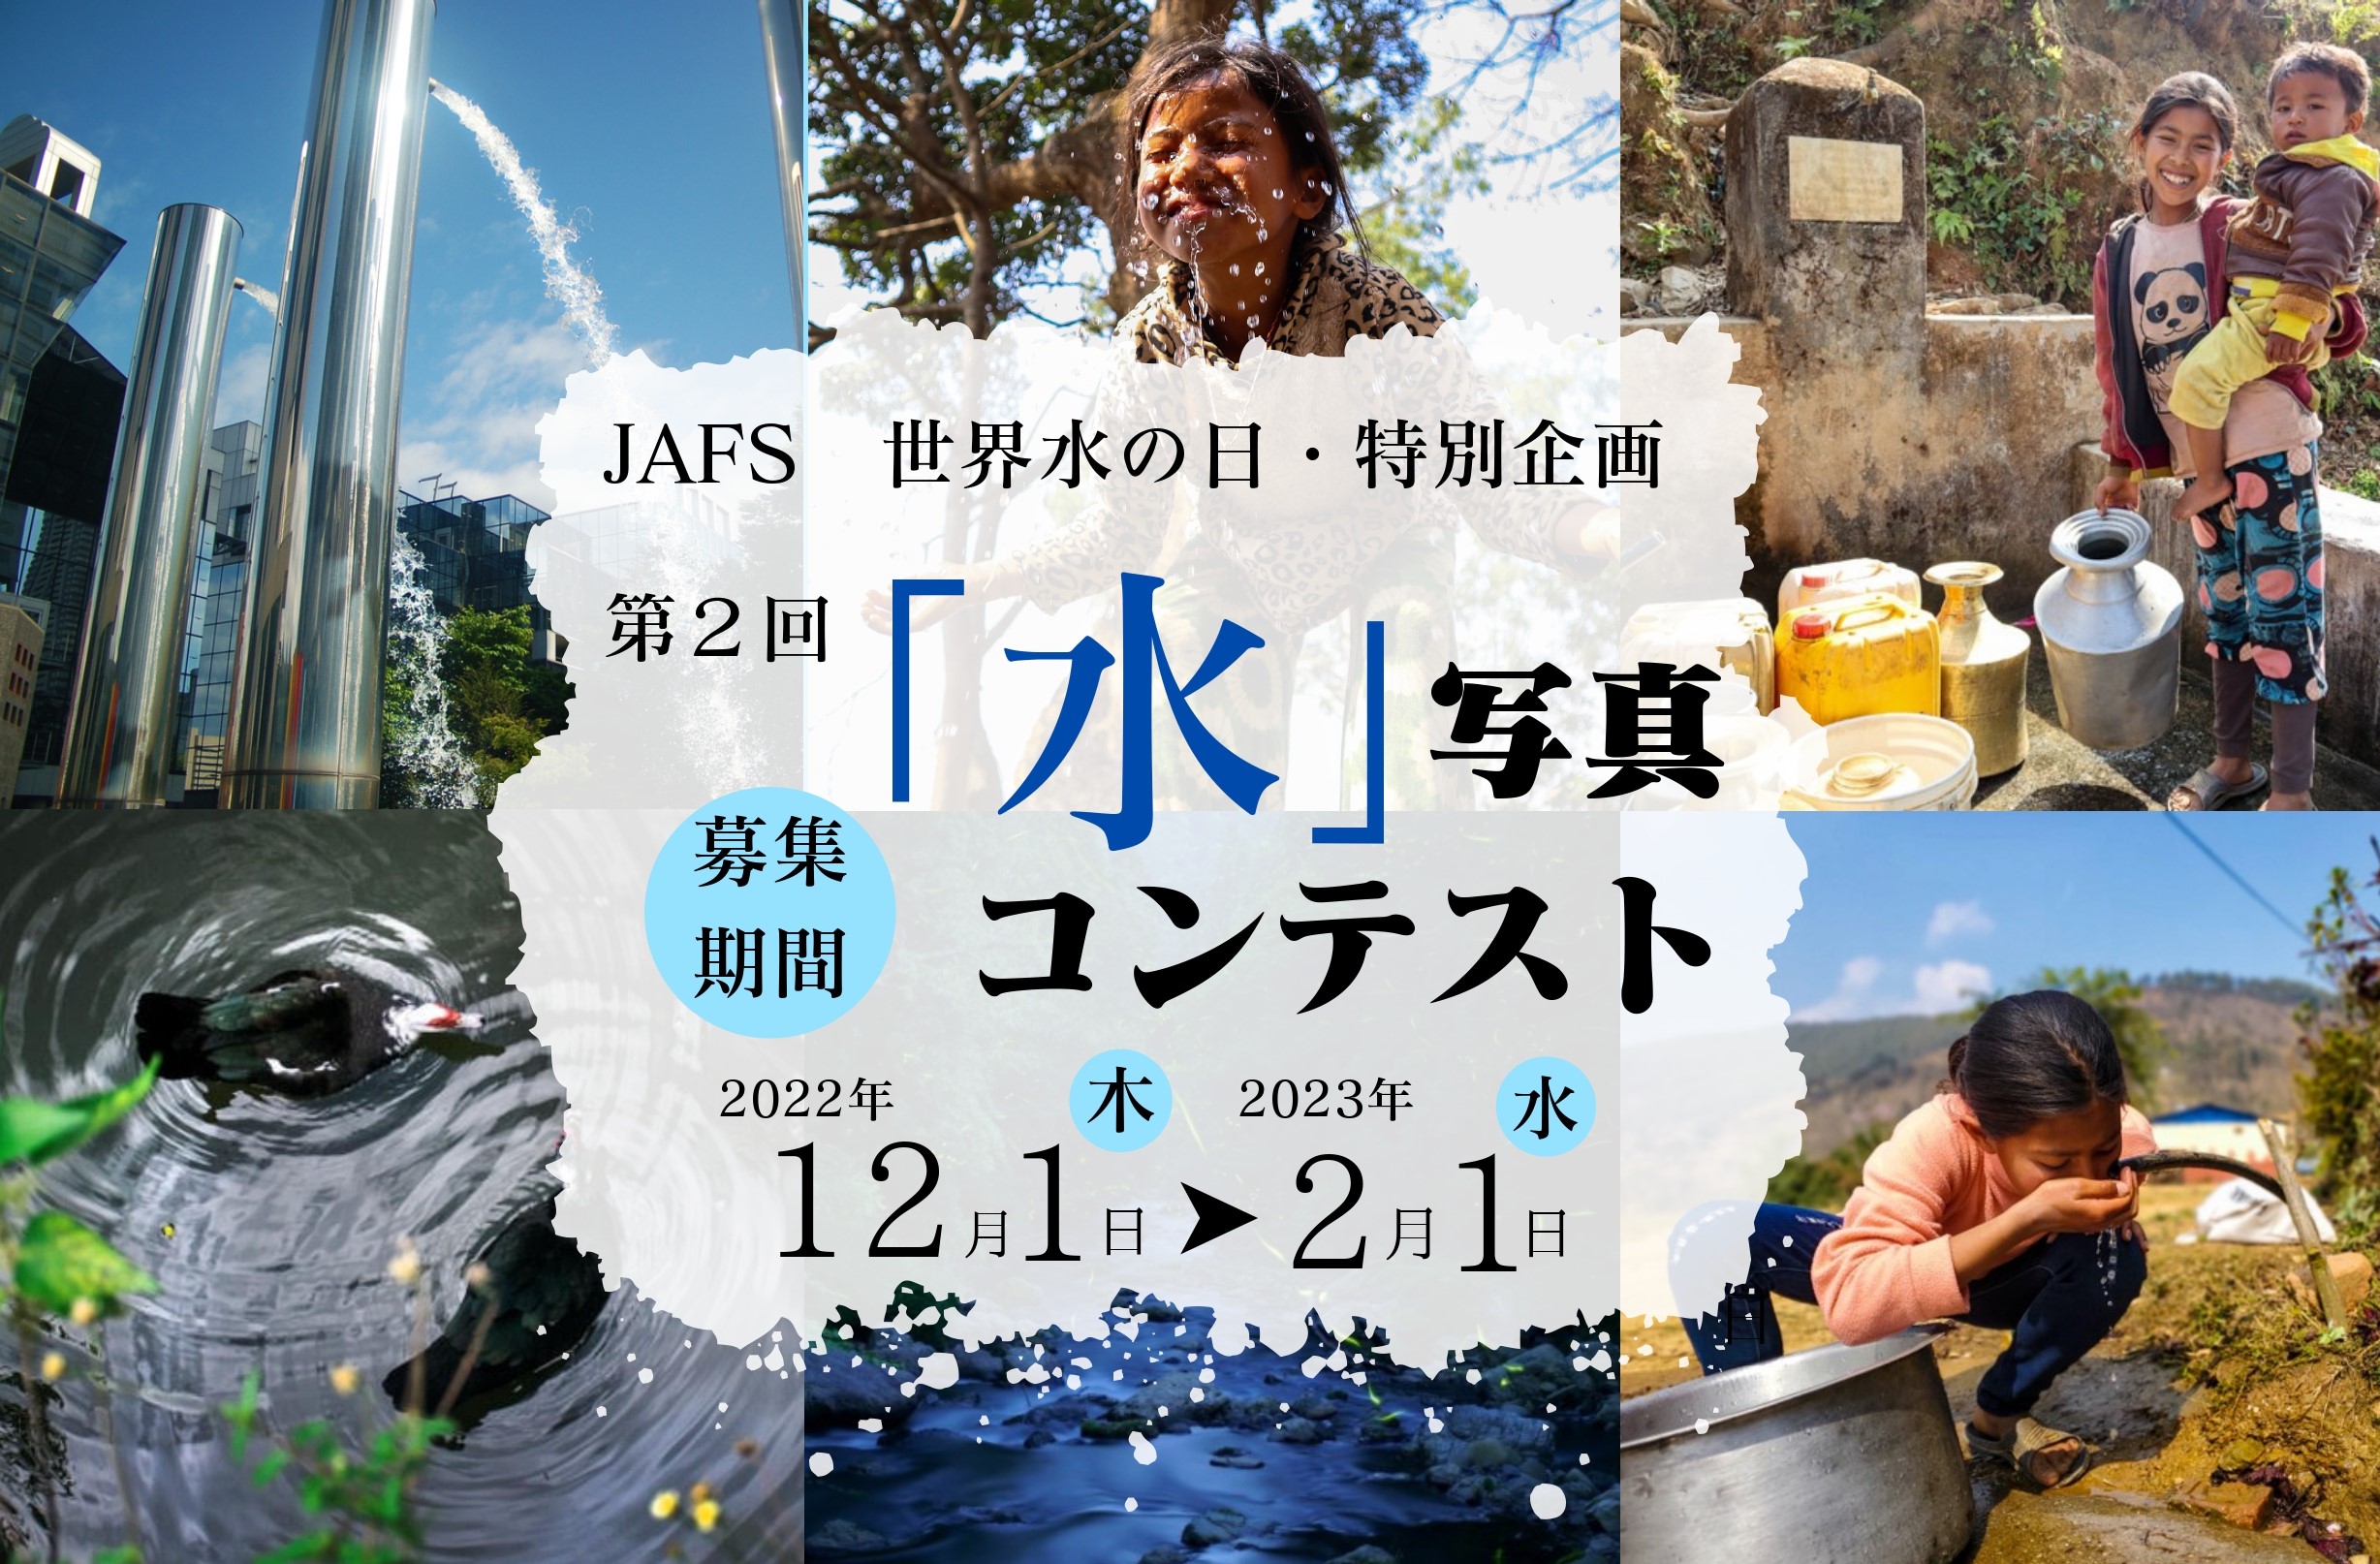 12/1~2/1 JAFS「水」写真コンテスト　作品募集